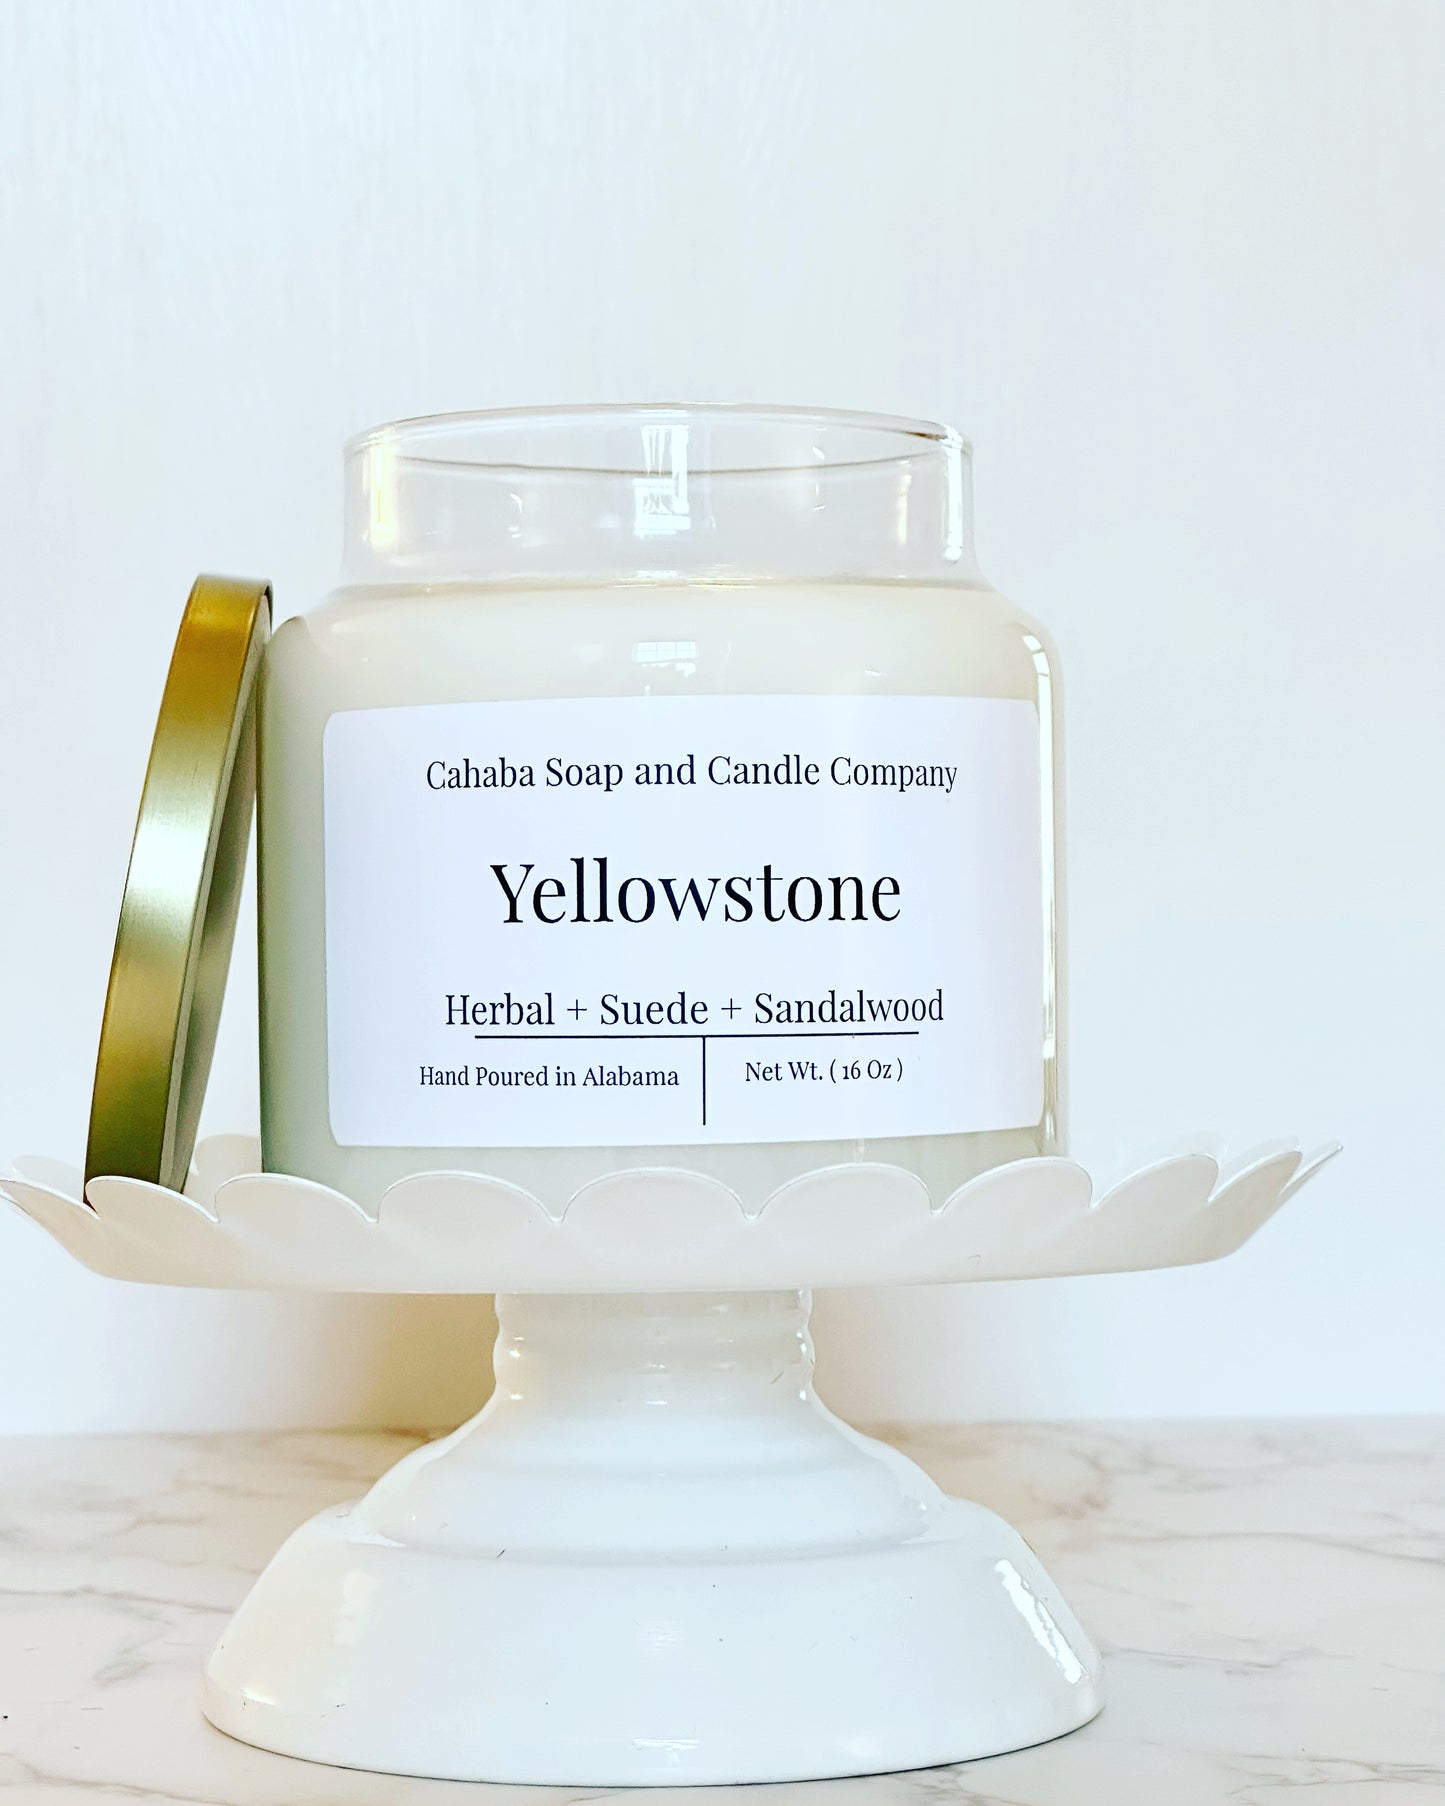 Yellowstone - Cahaba Soap and Candle Company